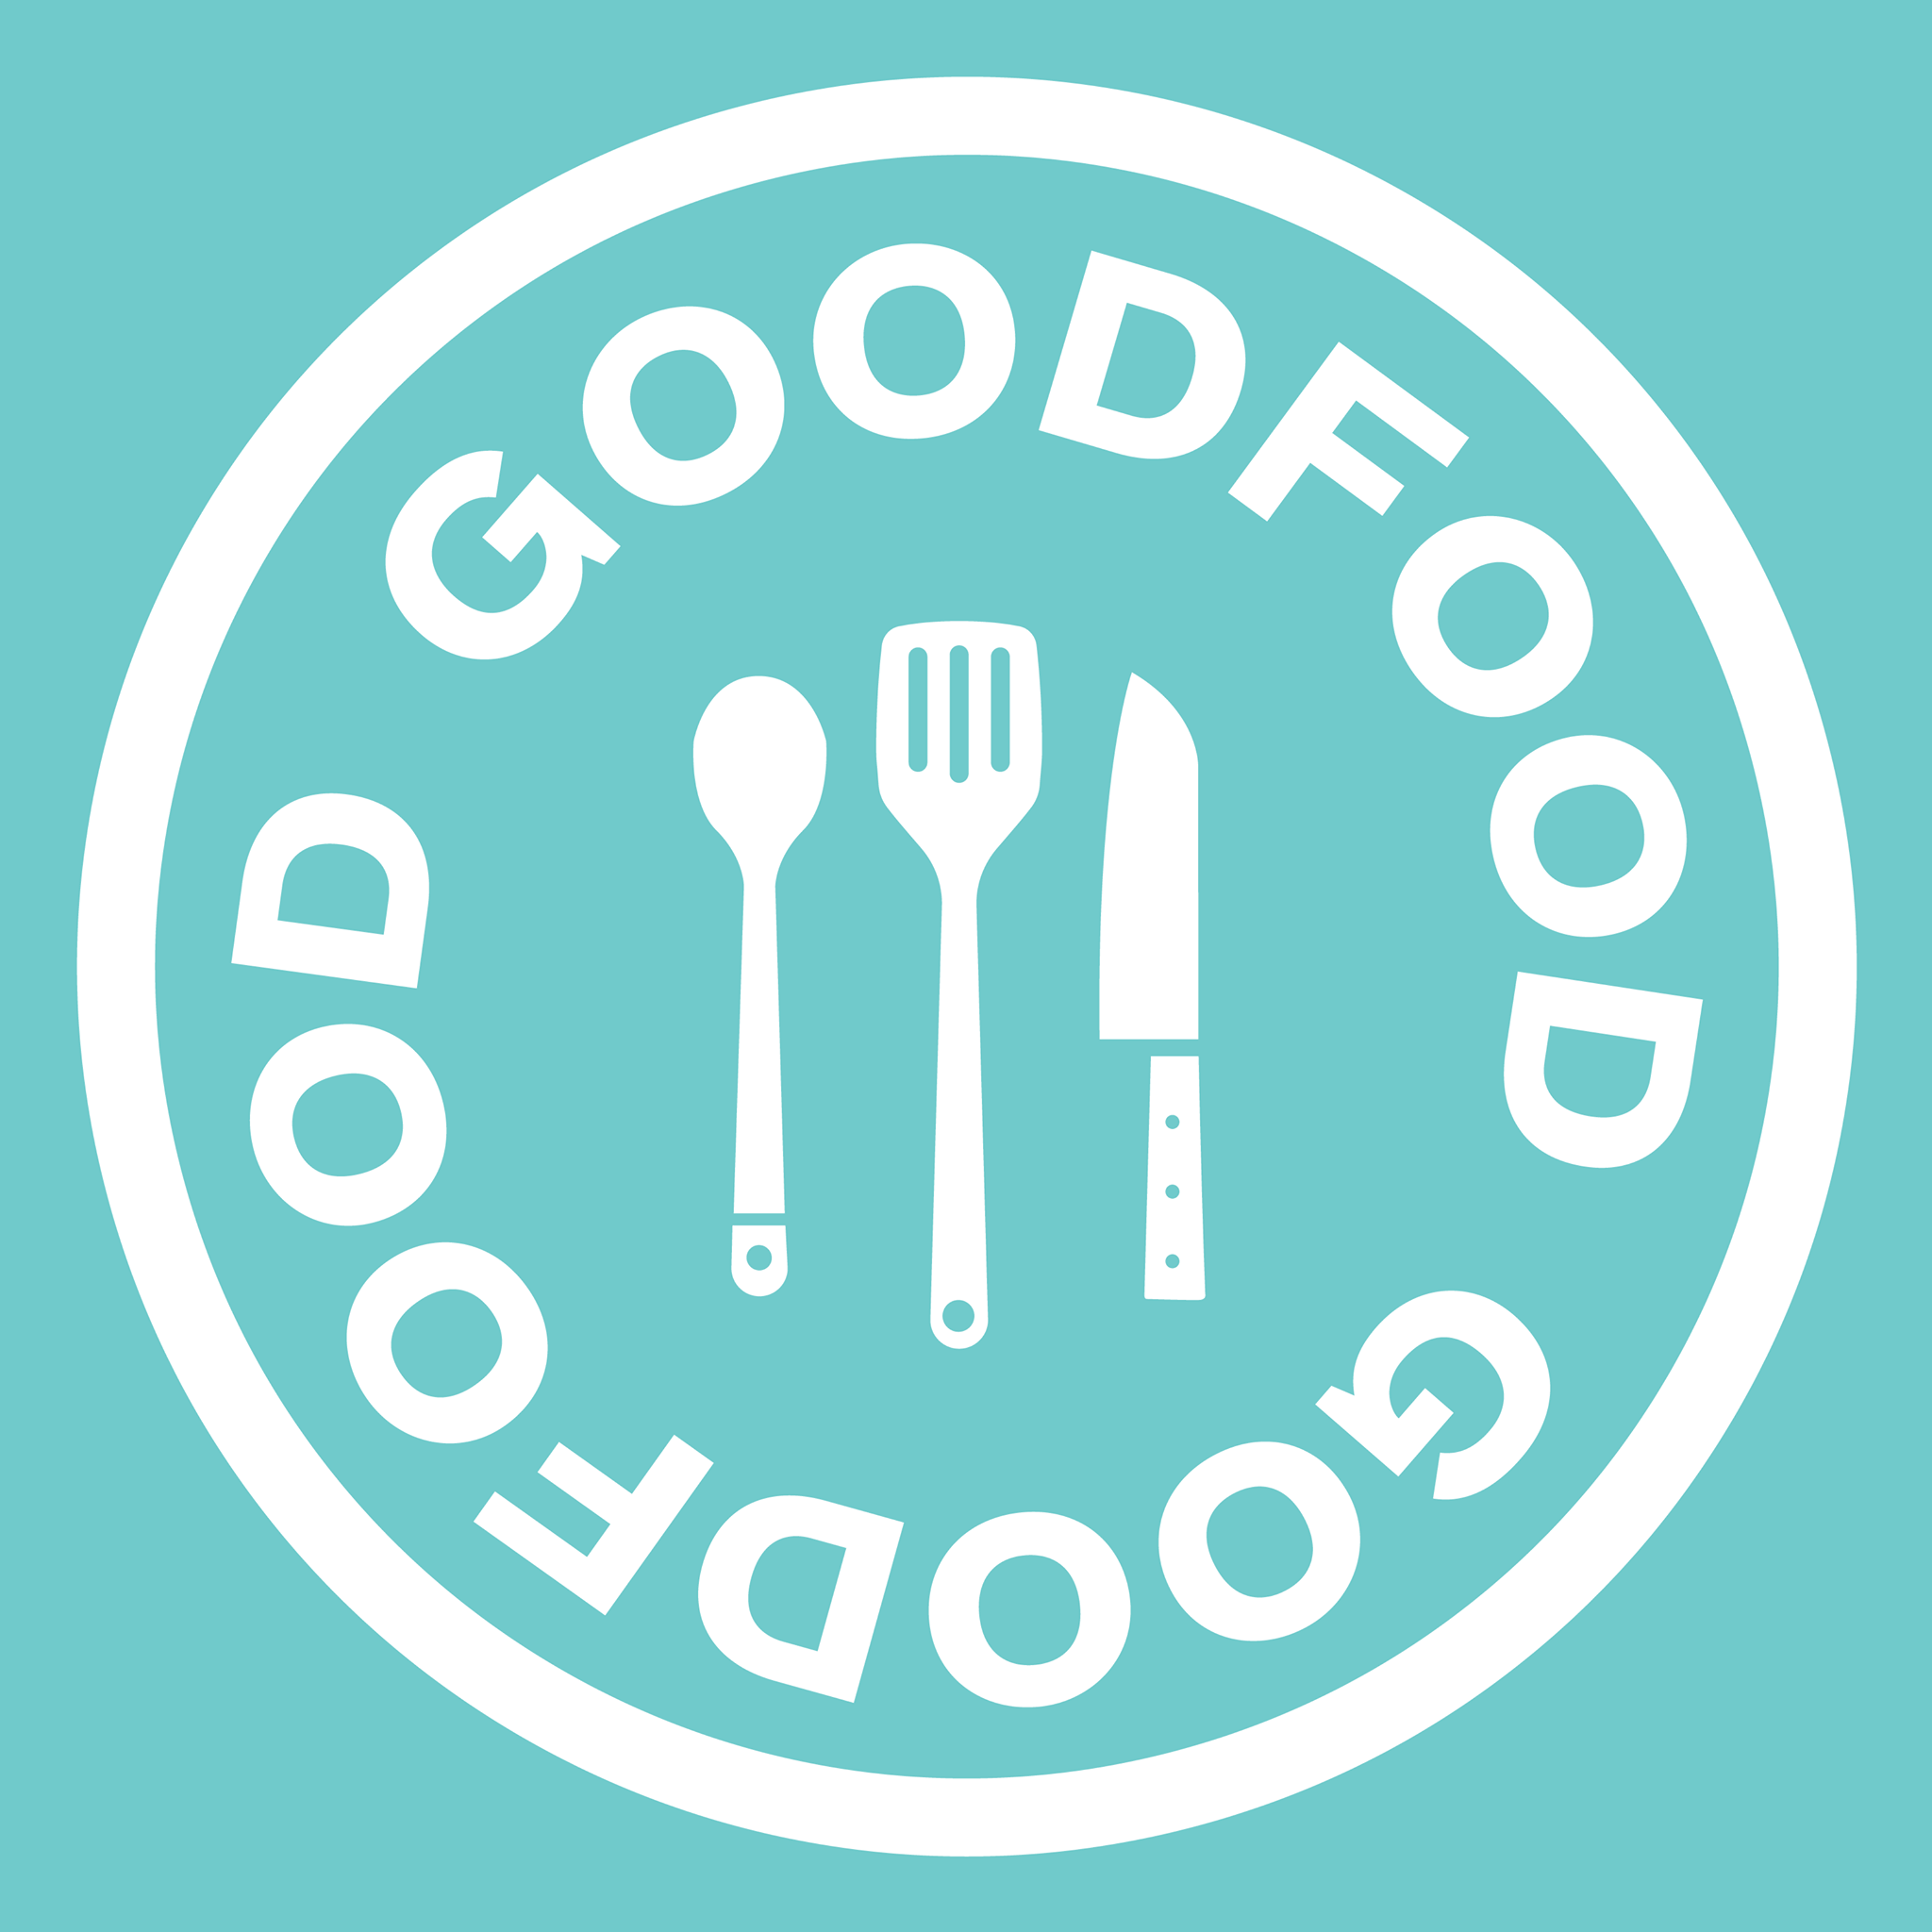 Goodfood Market (Canada)